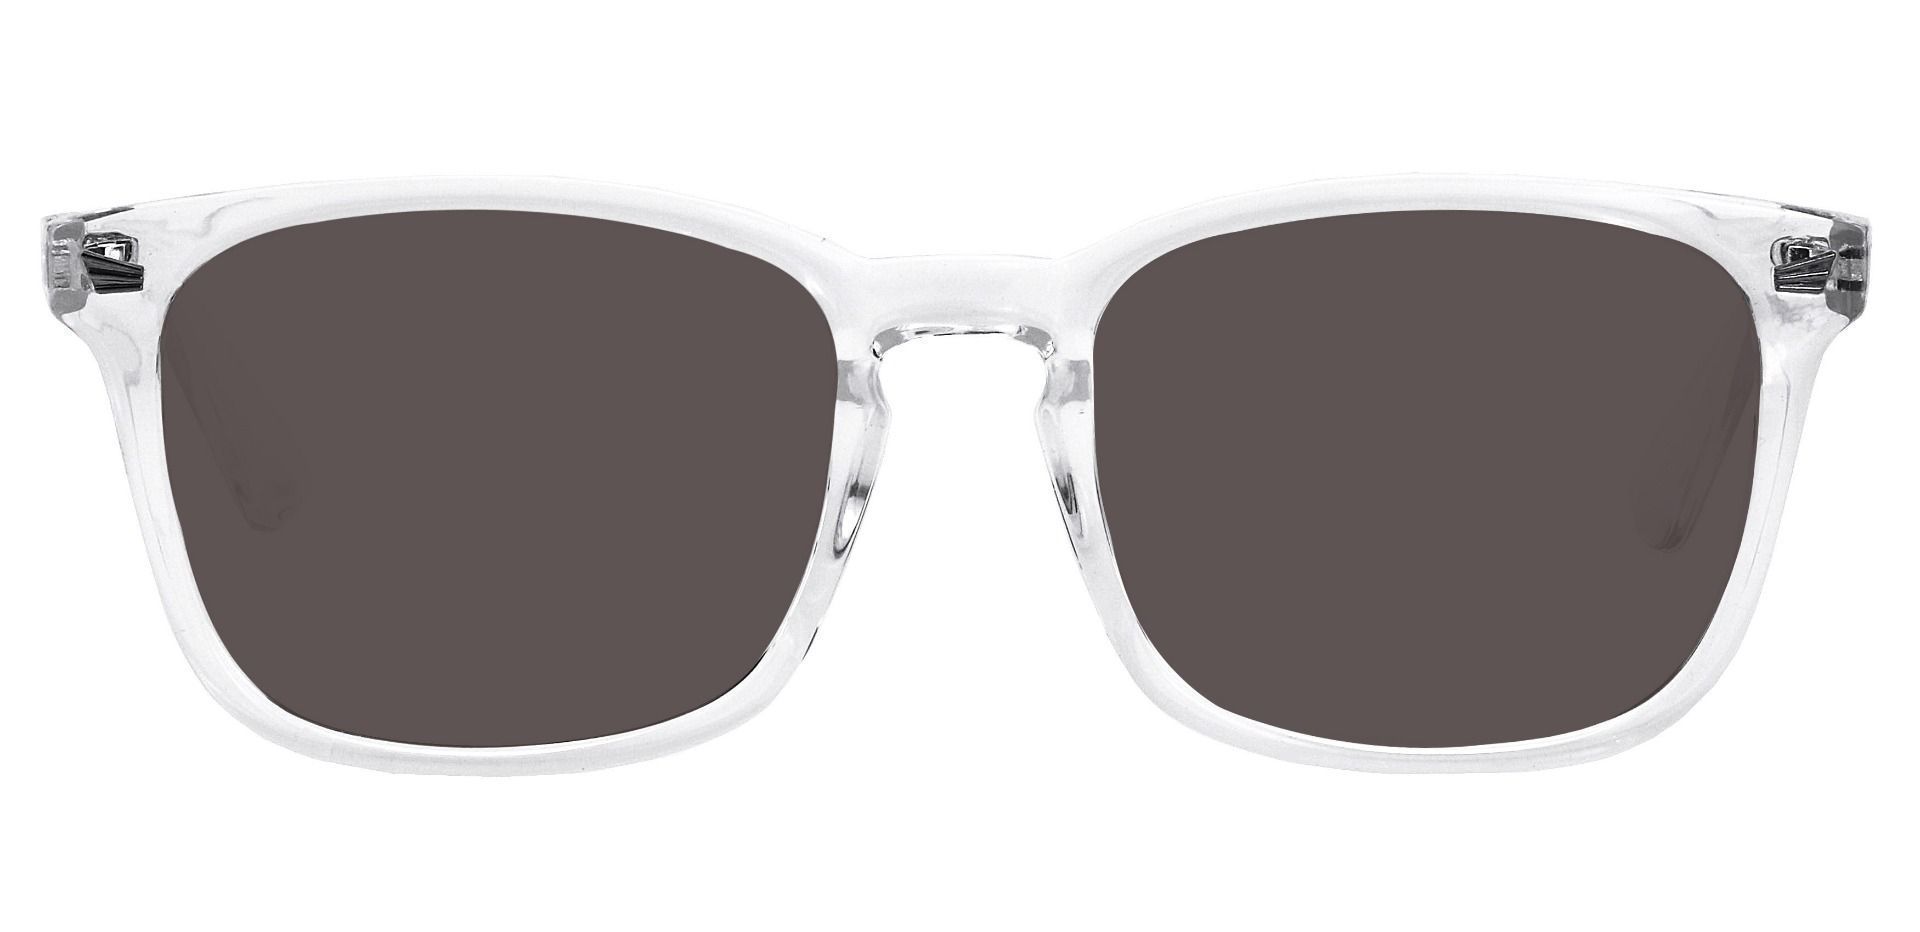 Rogan Square Prescription Sunglasses - Clear Frame With Gray Lenses